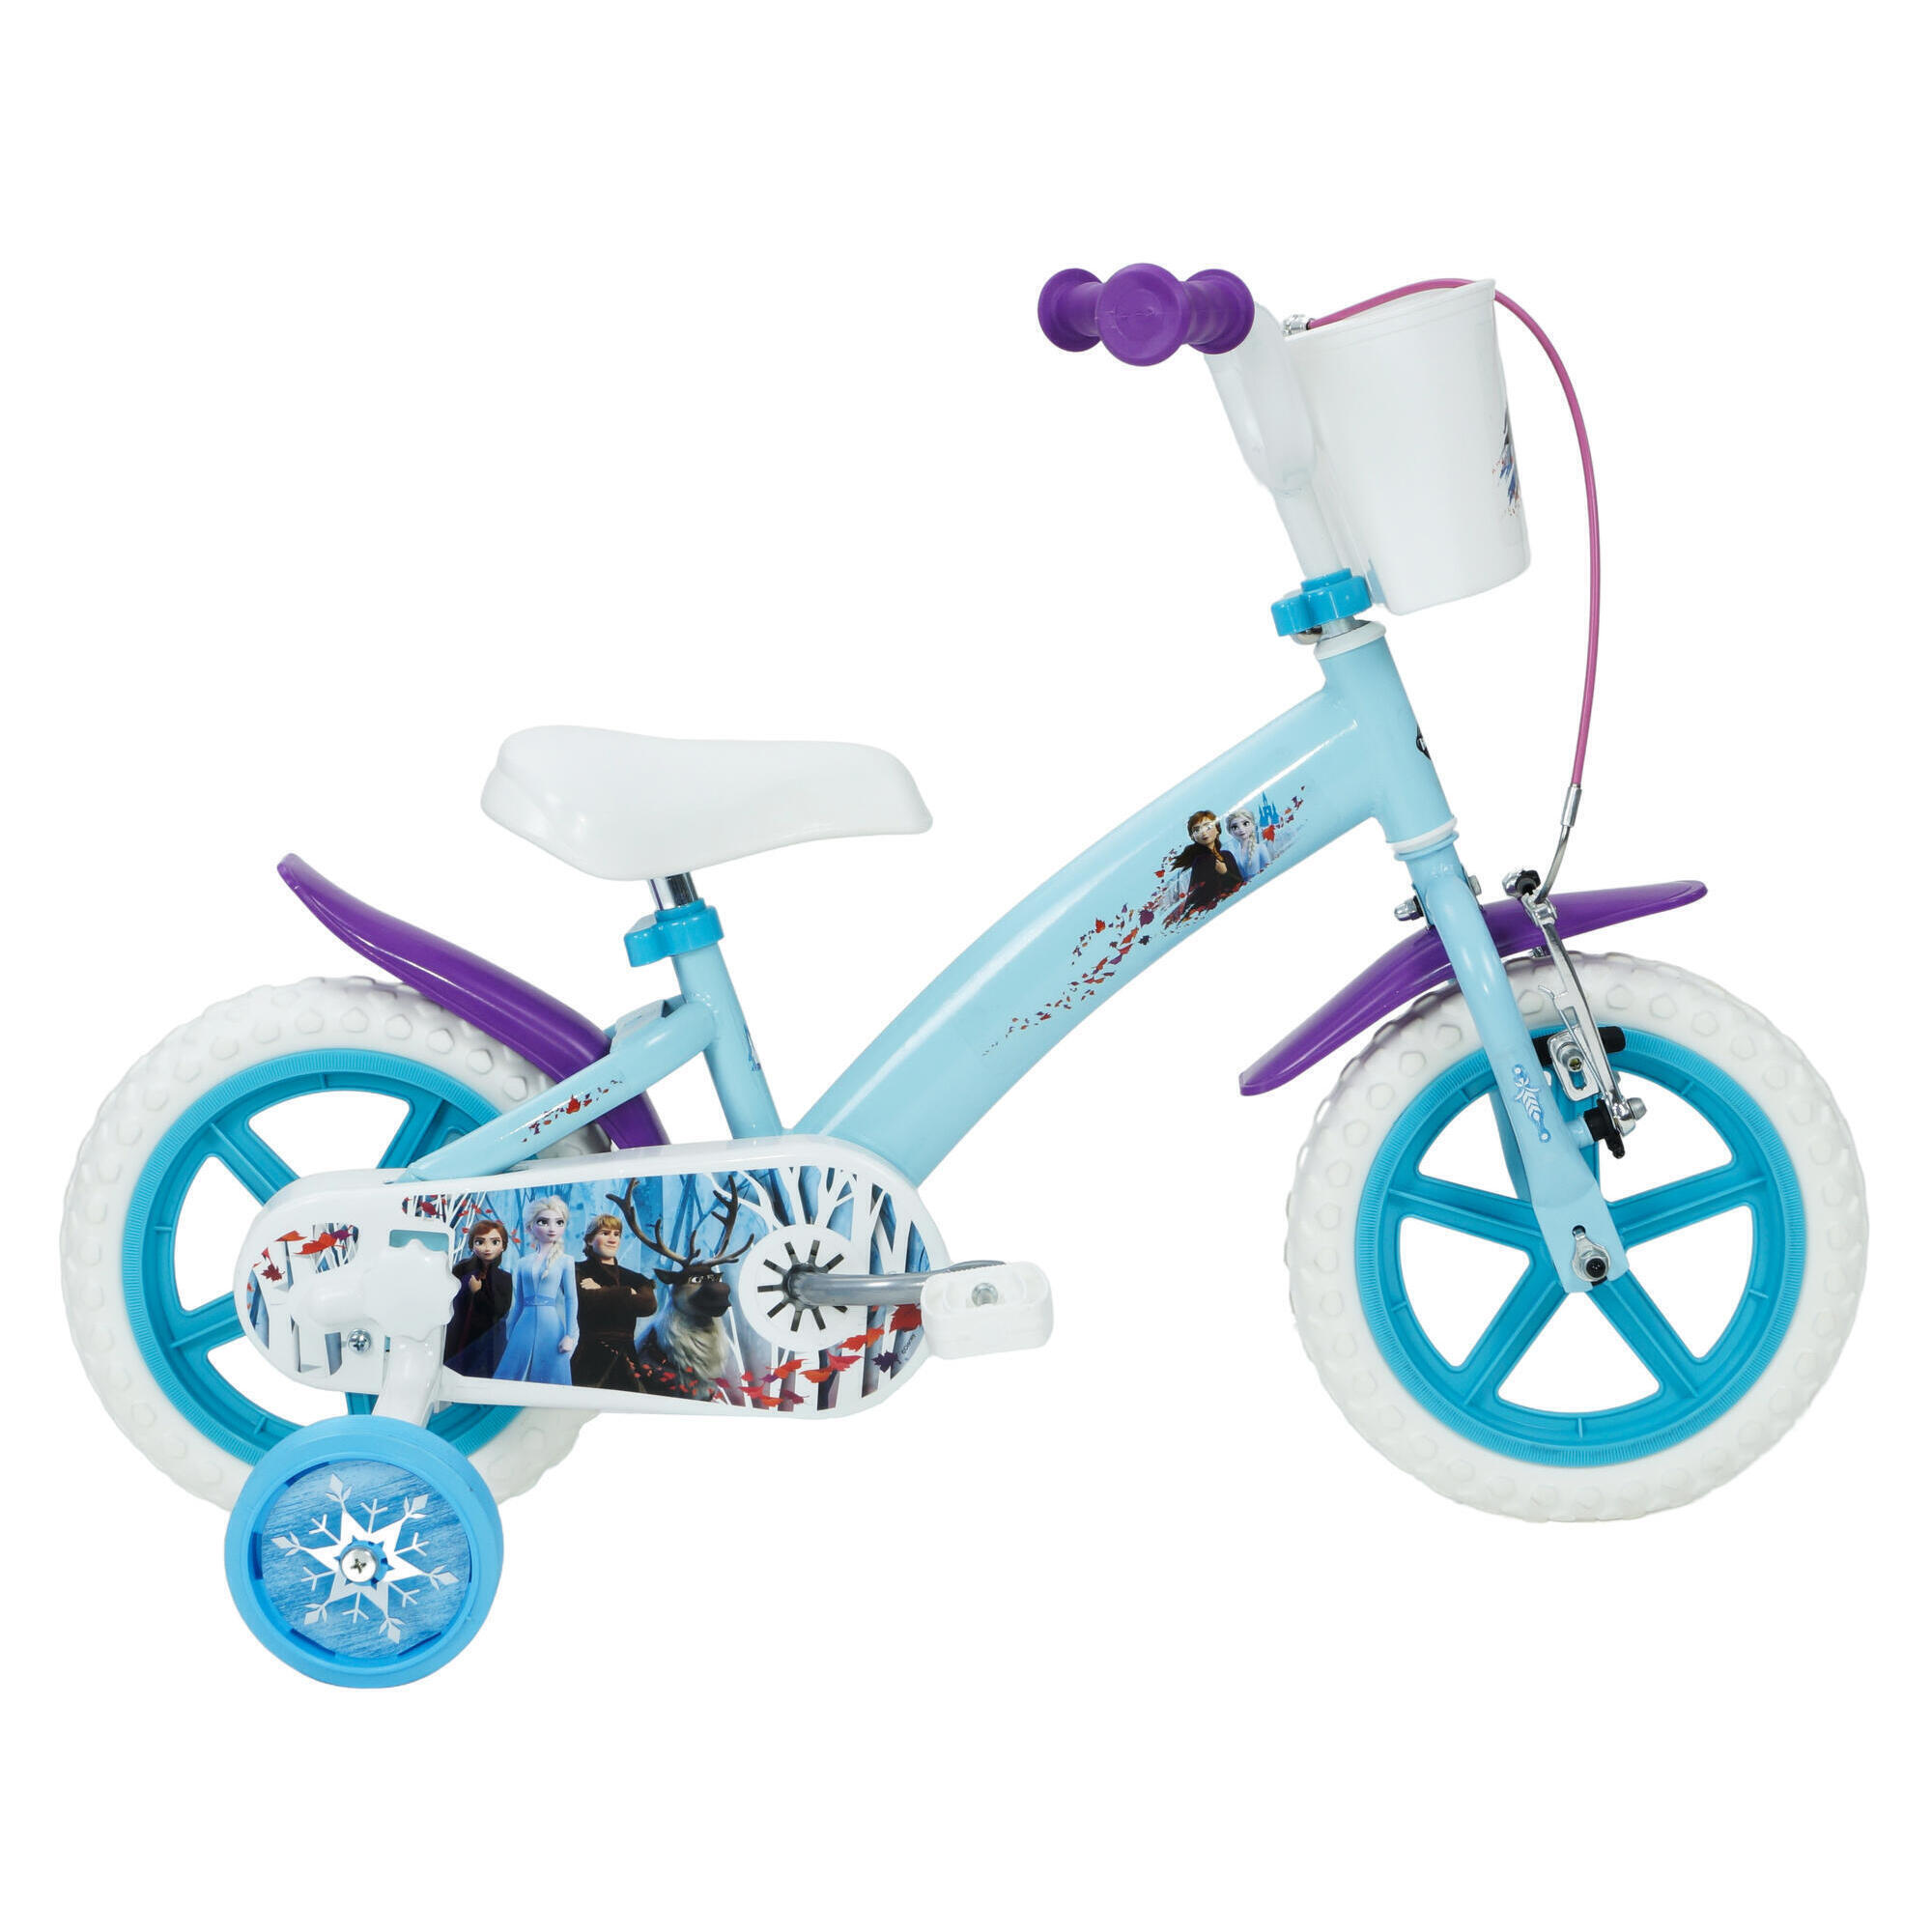 Huffy Disney Frozen 12" Kids Bike - Blue/White 1/5